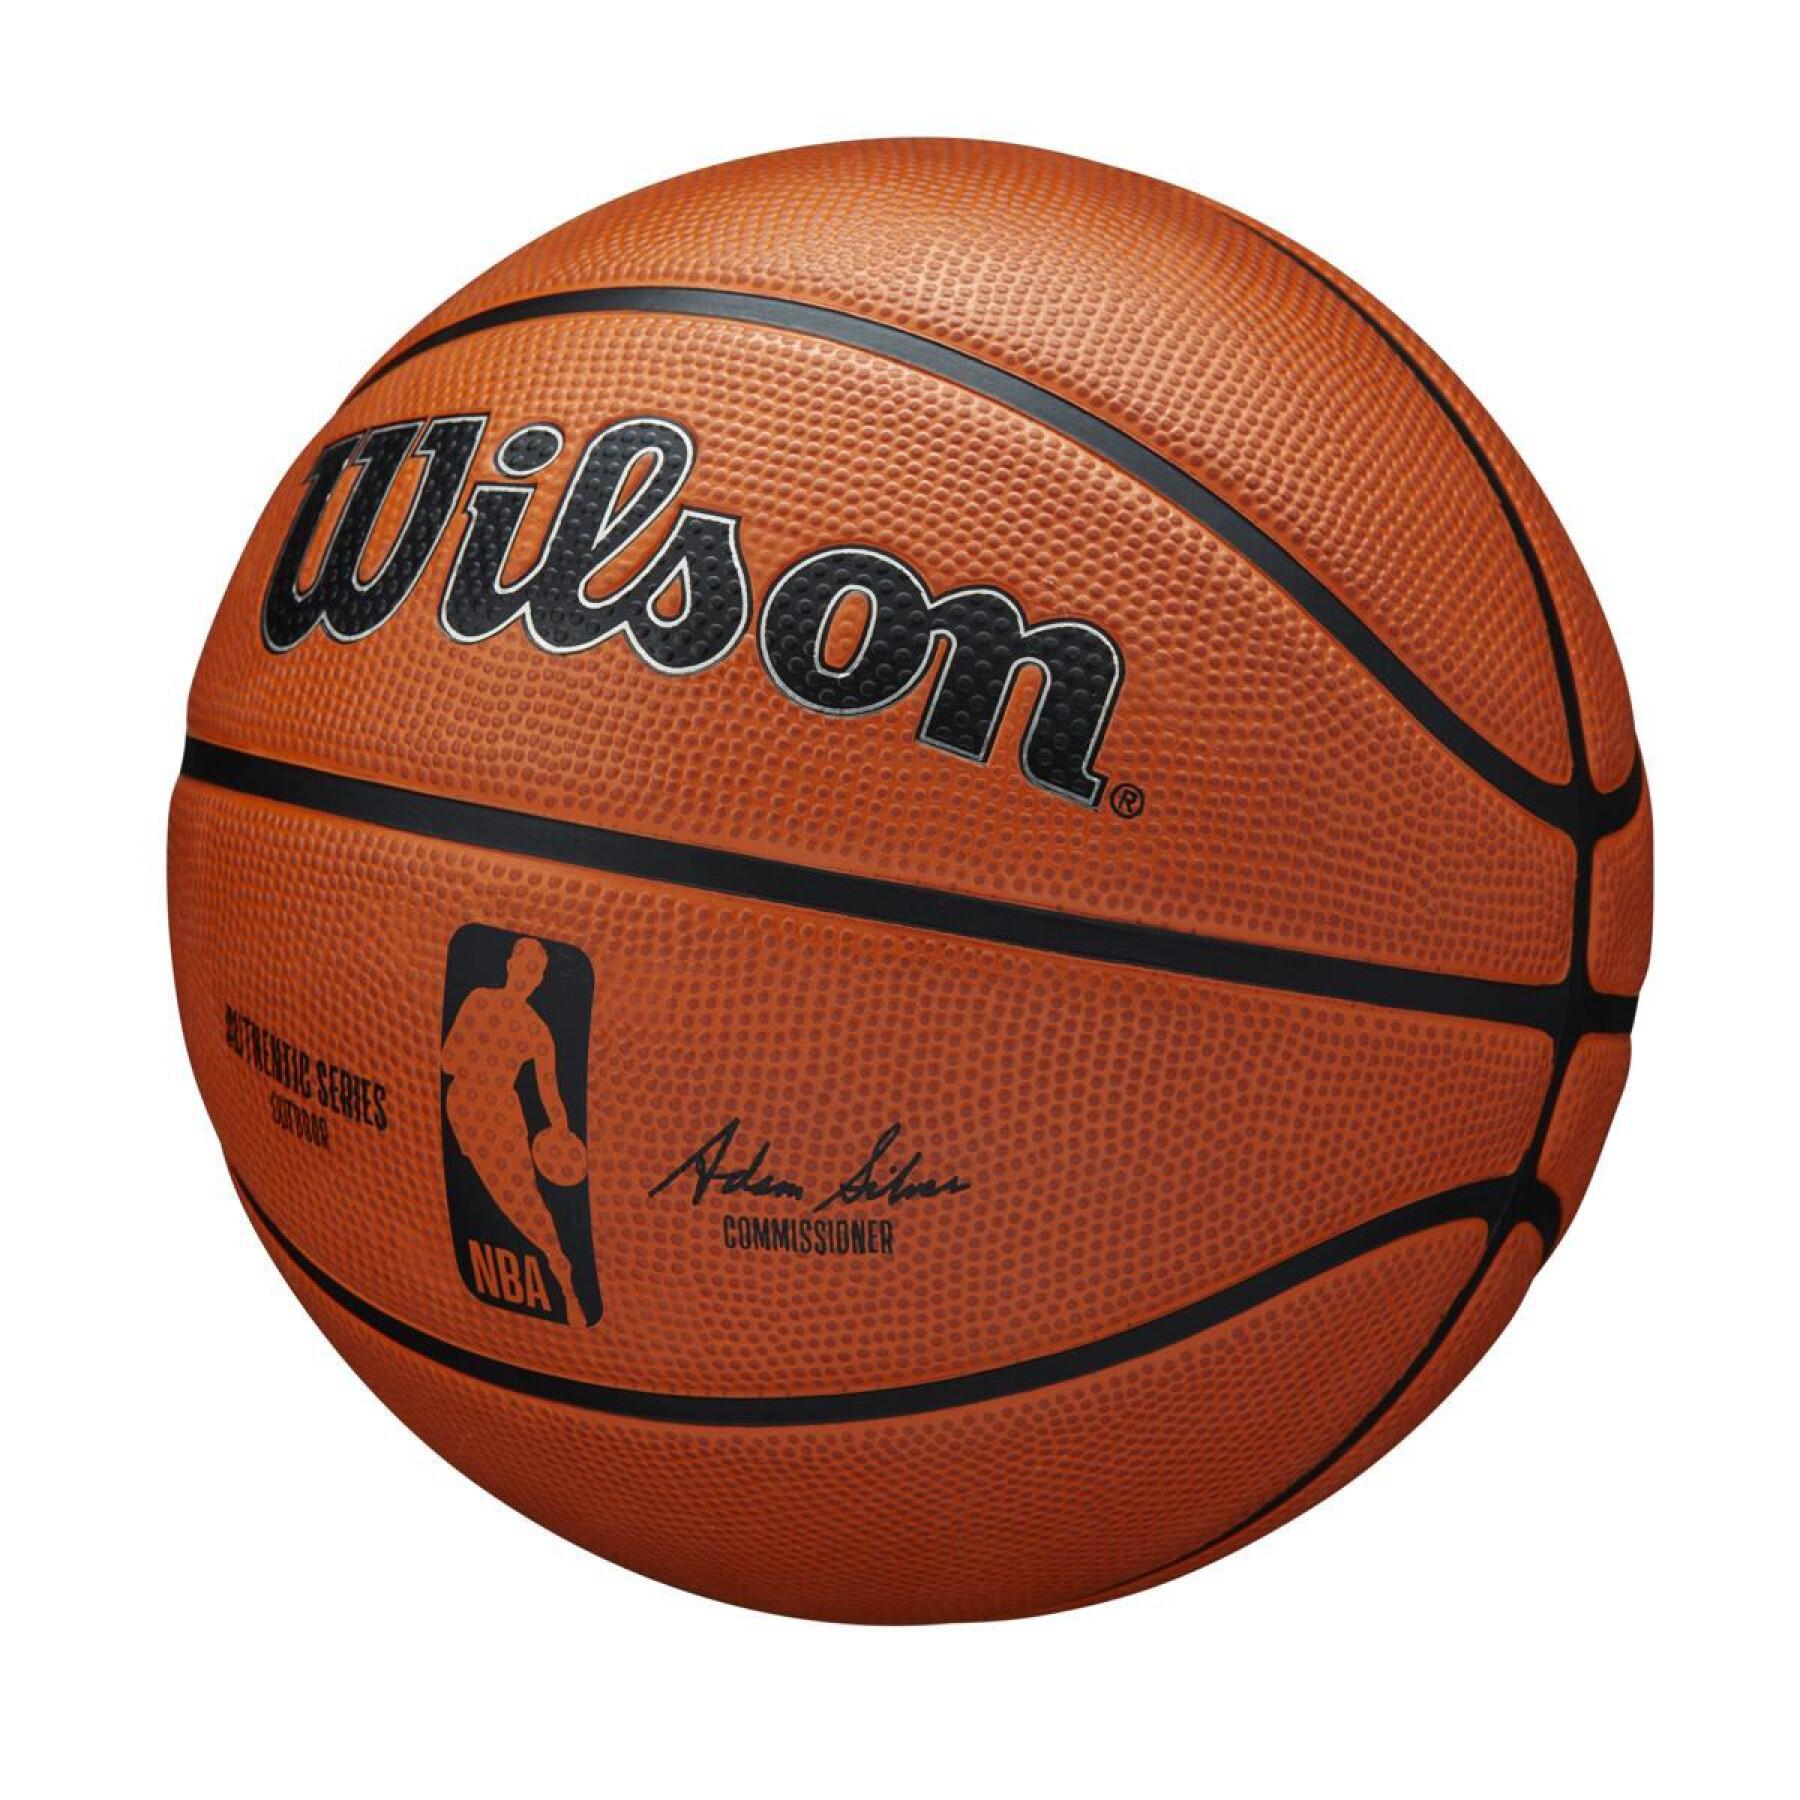 Ballon Wilson NBA Authentic